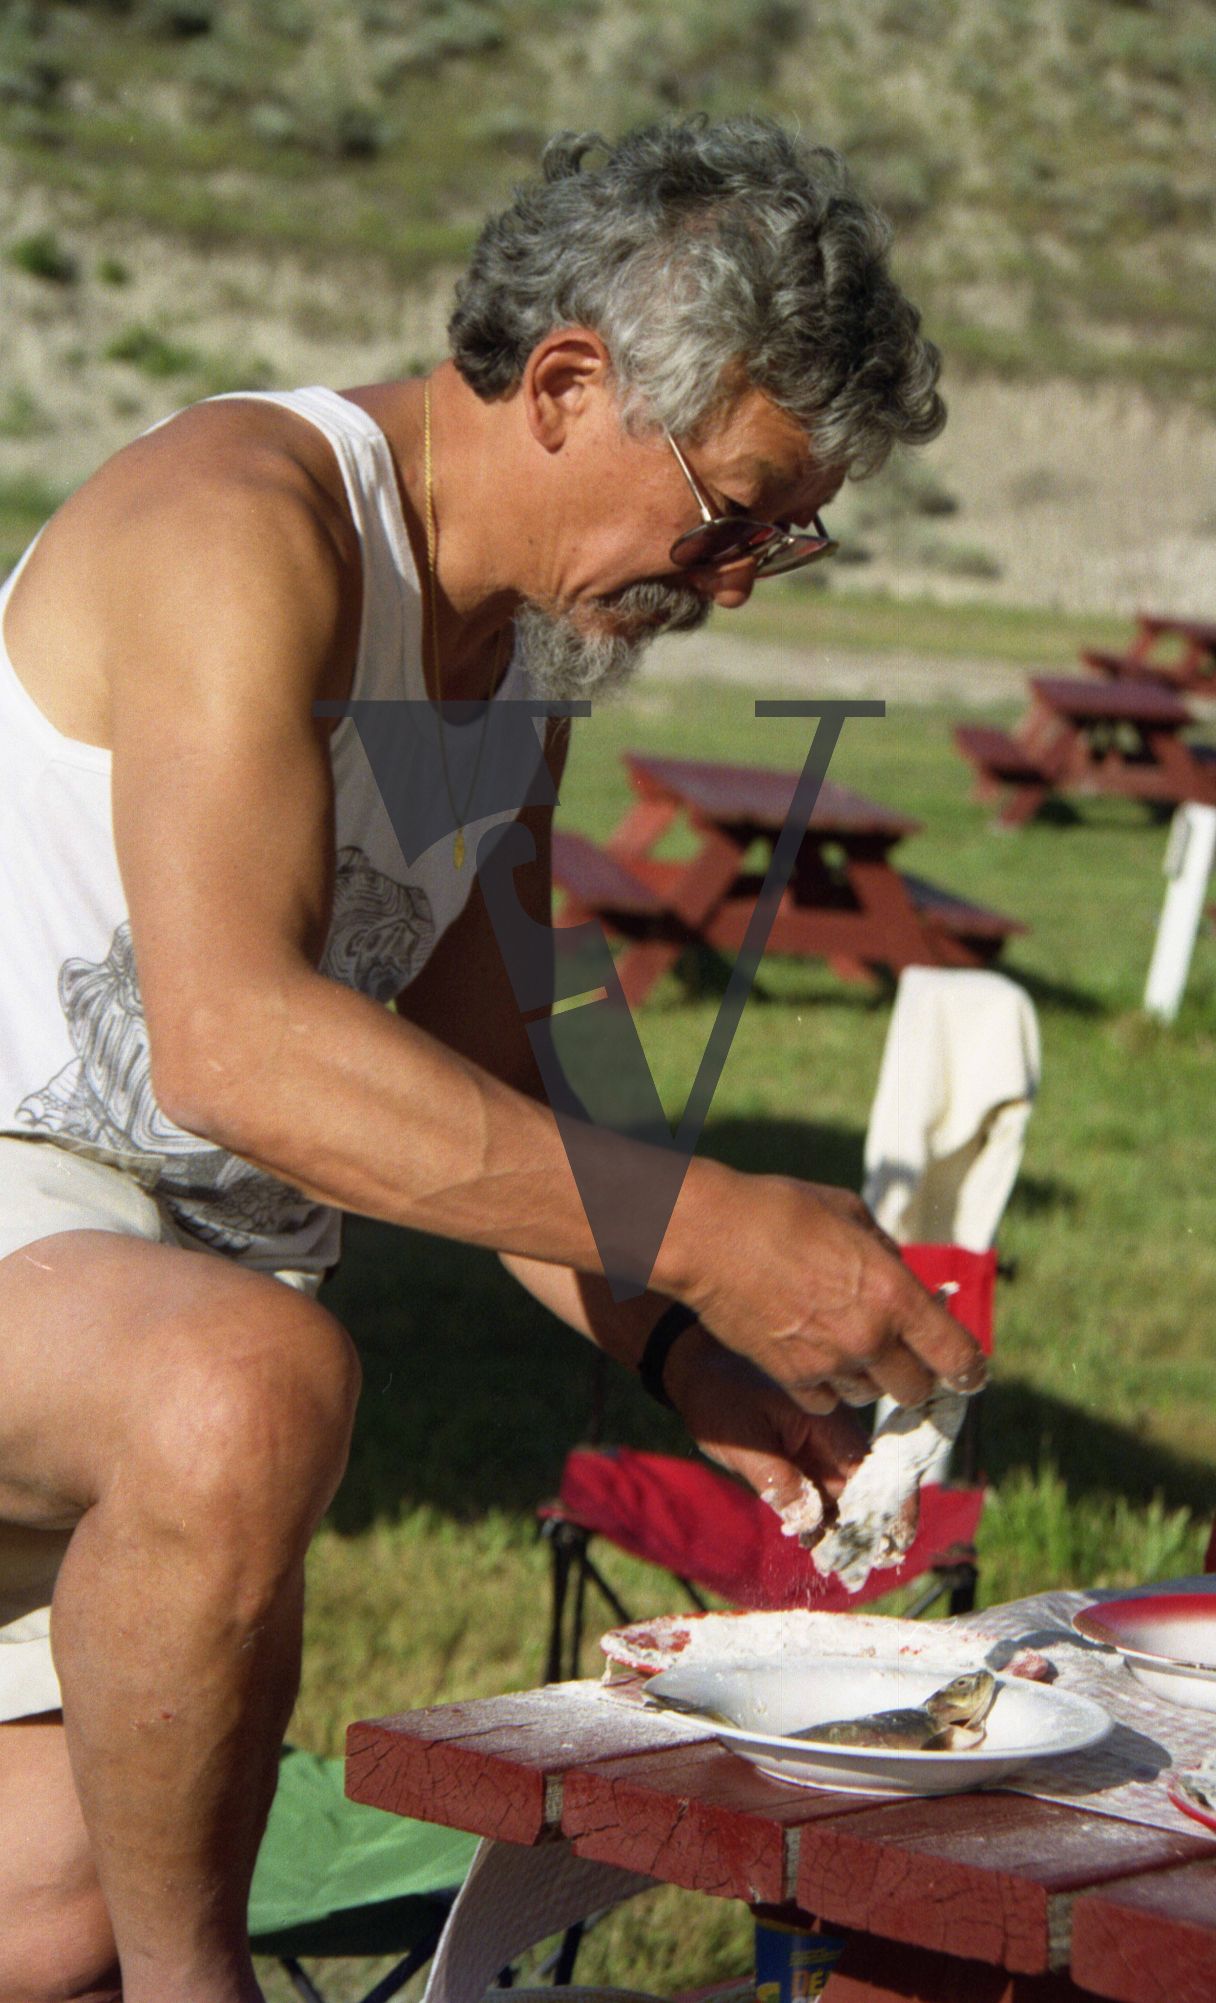 Osoyoos, Okanagan Valley, British Columbia, David Suzuki, vest, preparing breakfast, fish.